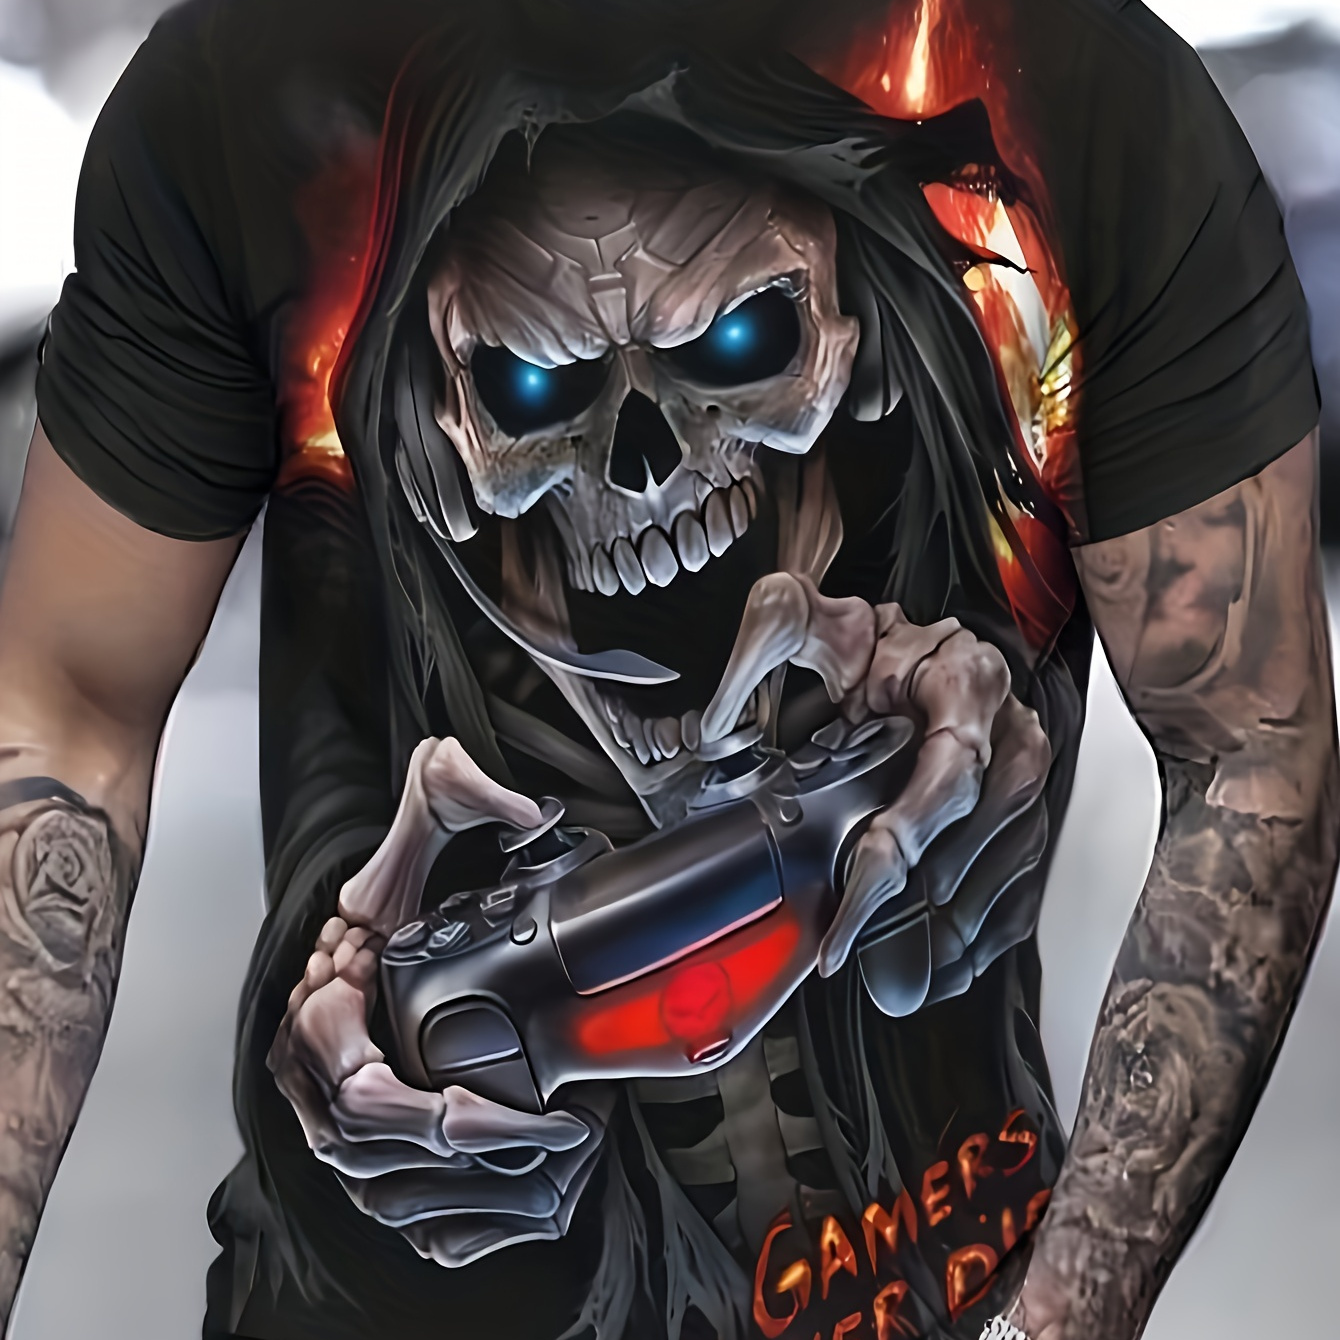 

Halloween Skeleton Gaming T-shirt For Men - Fun Graphic Tee For Gamers, Loungewear & Pajama Top, Soft & Comfortable